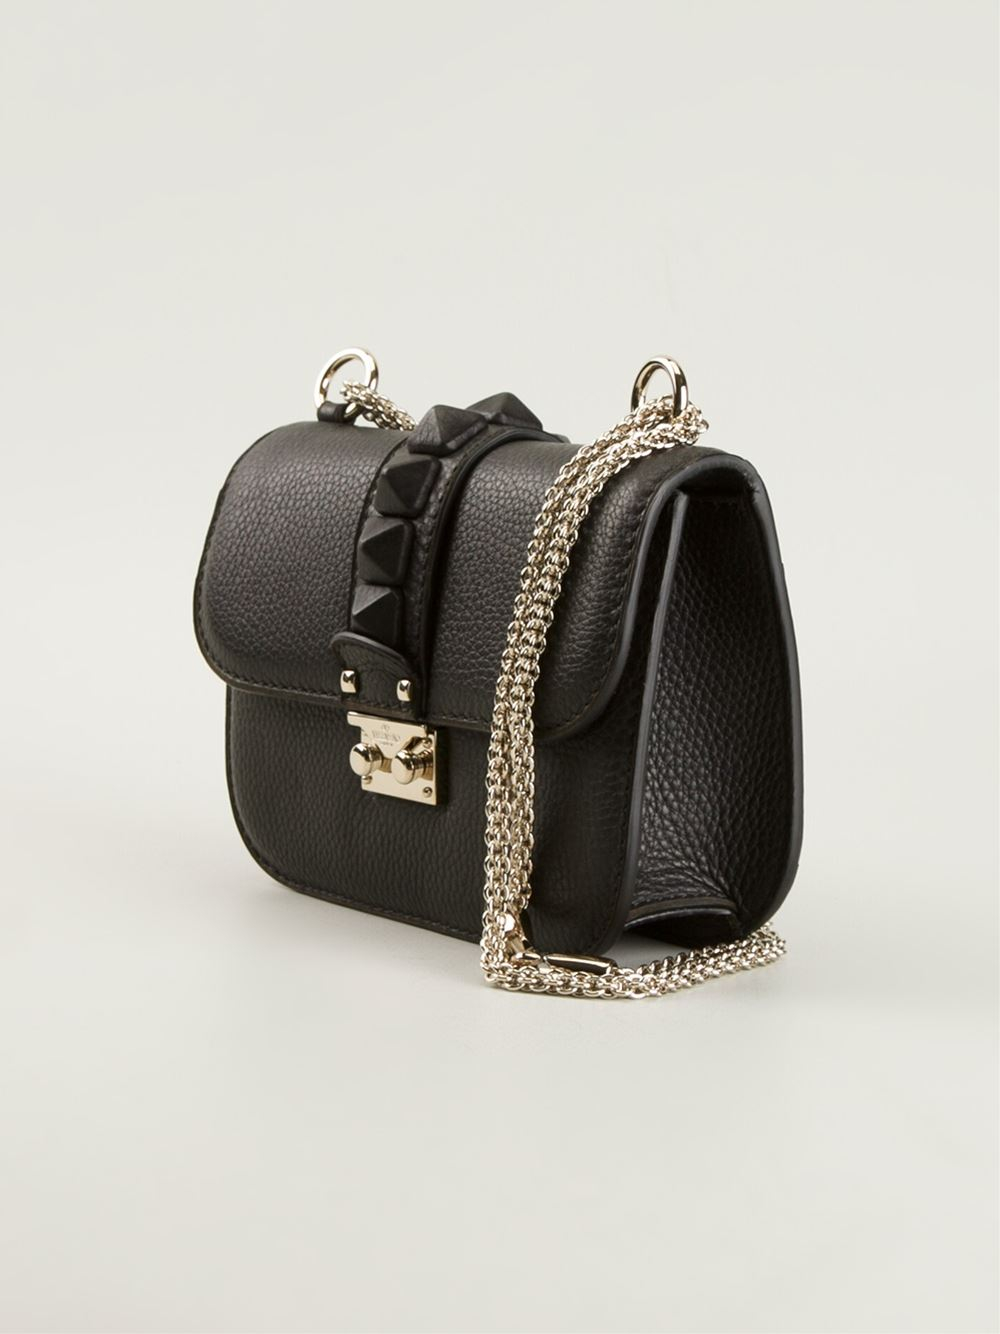 Lyst - Valentino Medium Glam Lock Shoulder Bag in Black